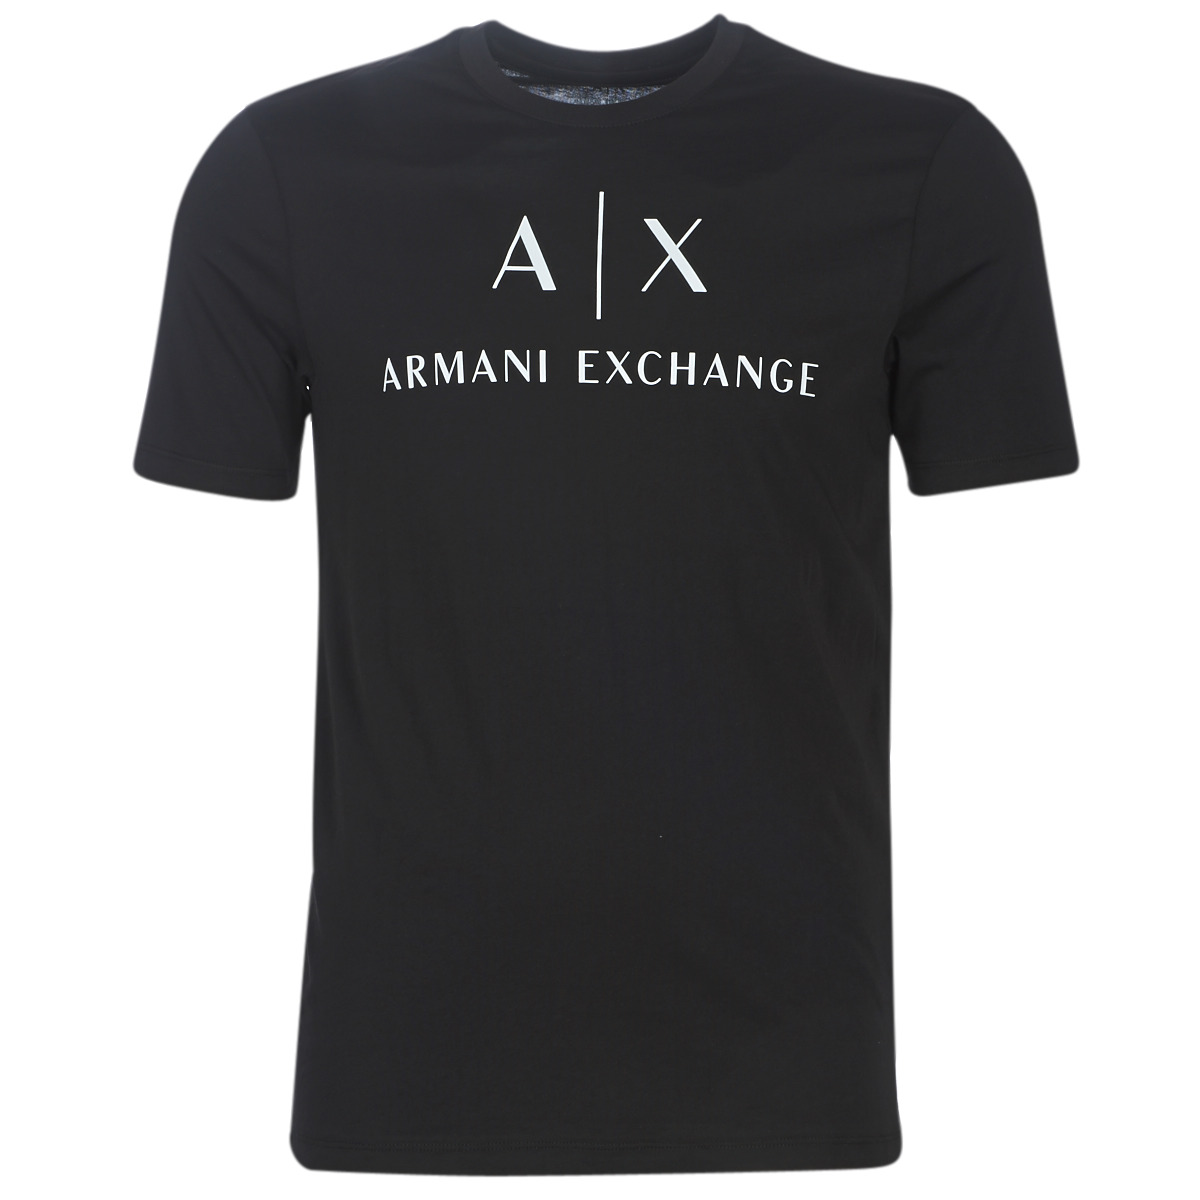 armani exchange t shirts canada